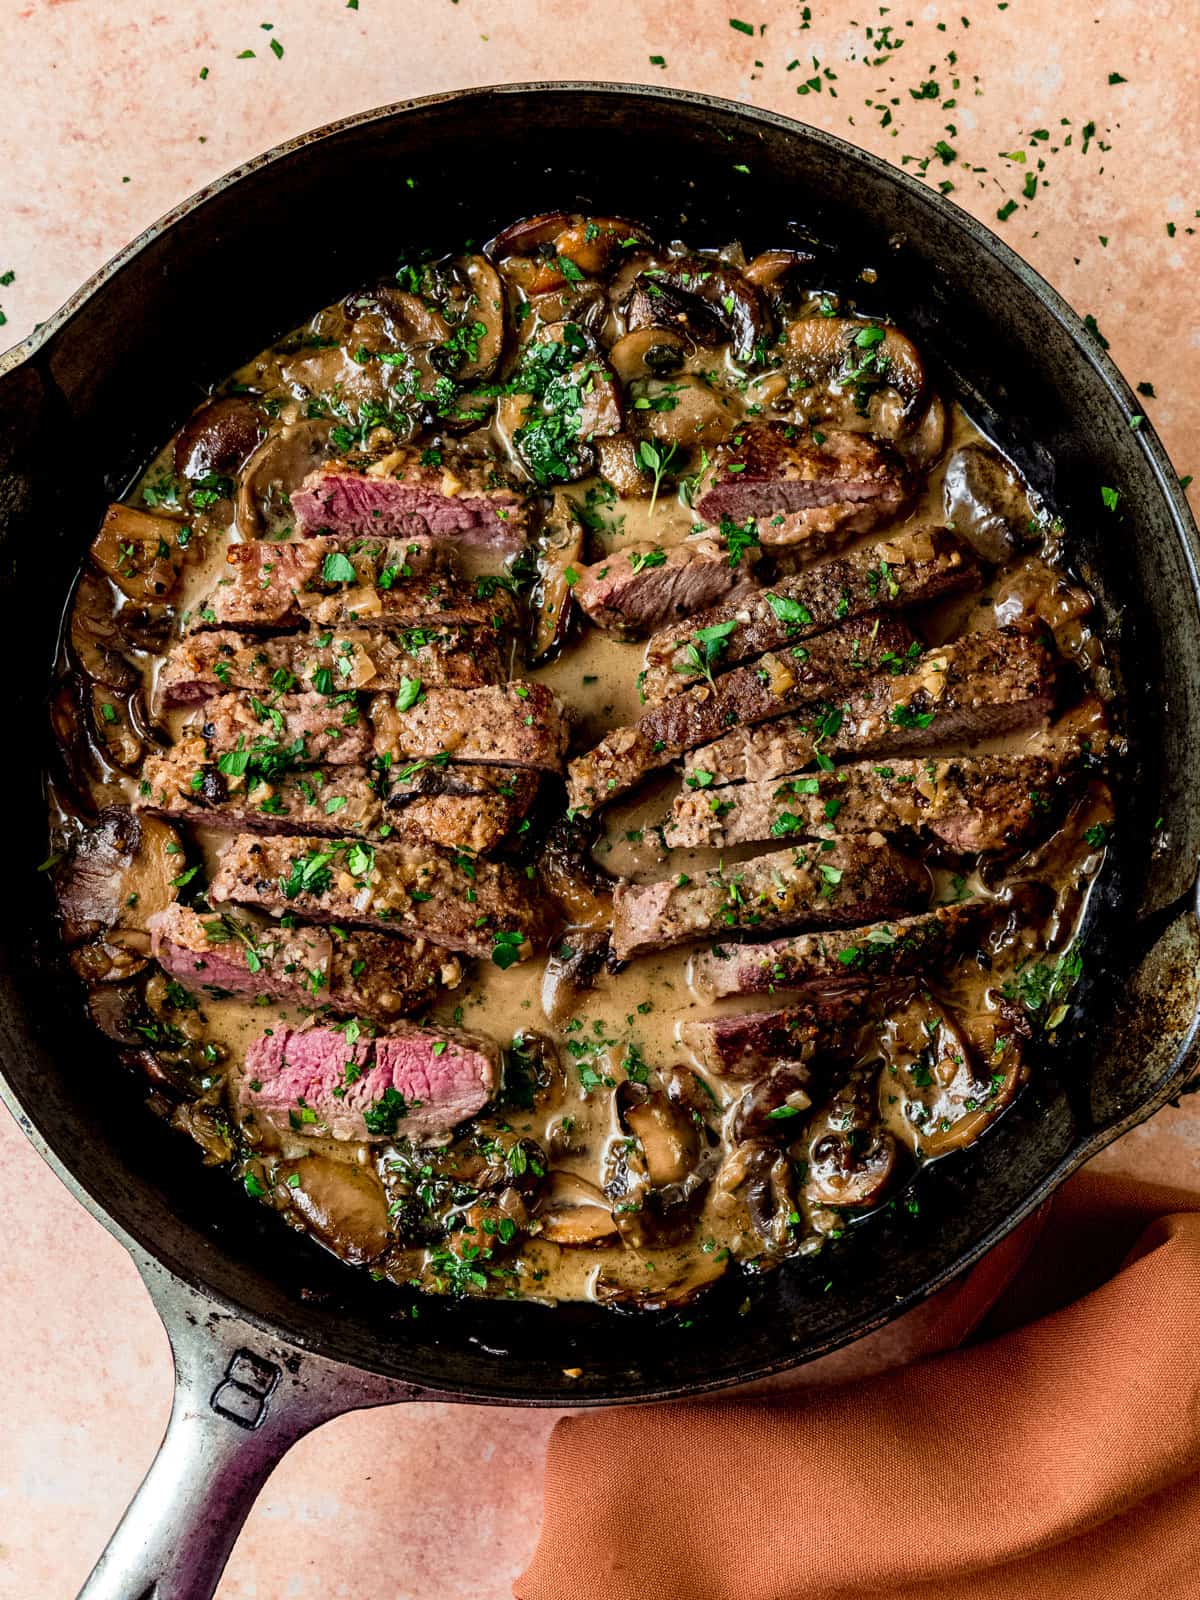 Steak marsala with mushrooms in a creamy marsala wine sauce.